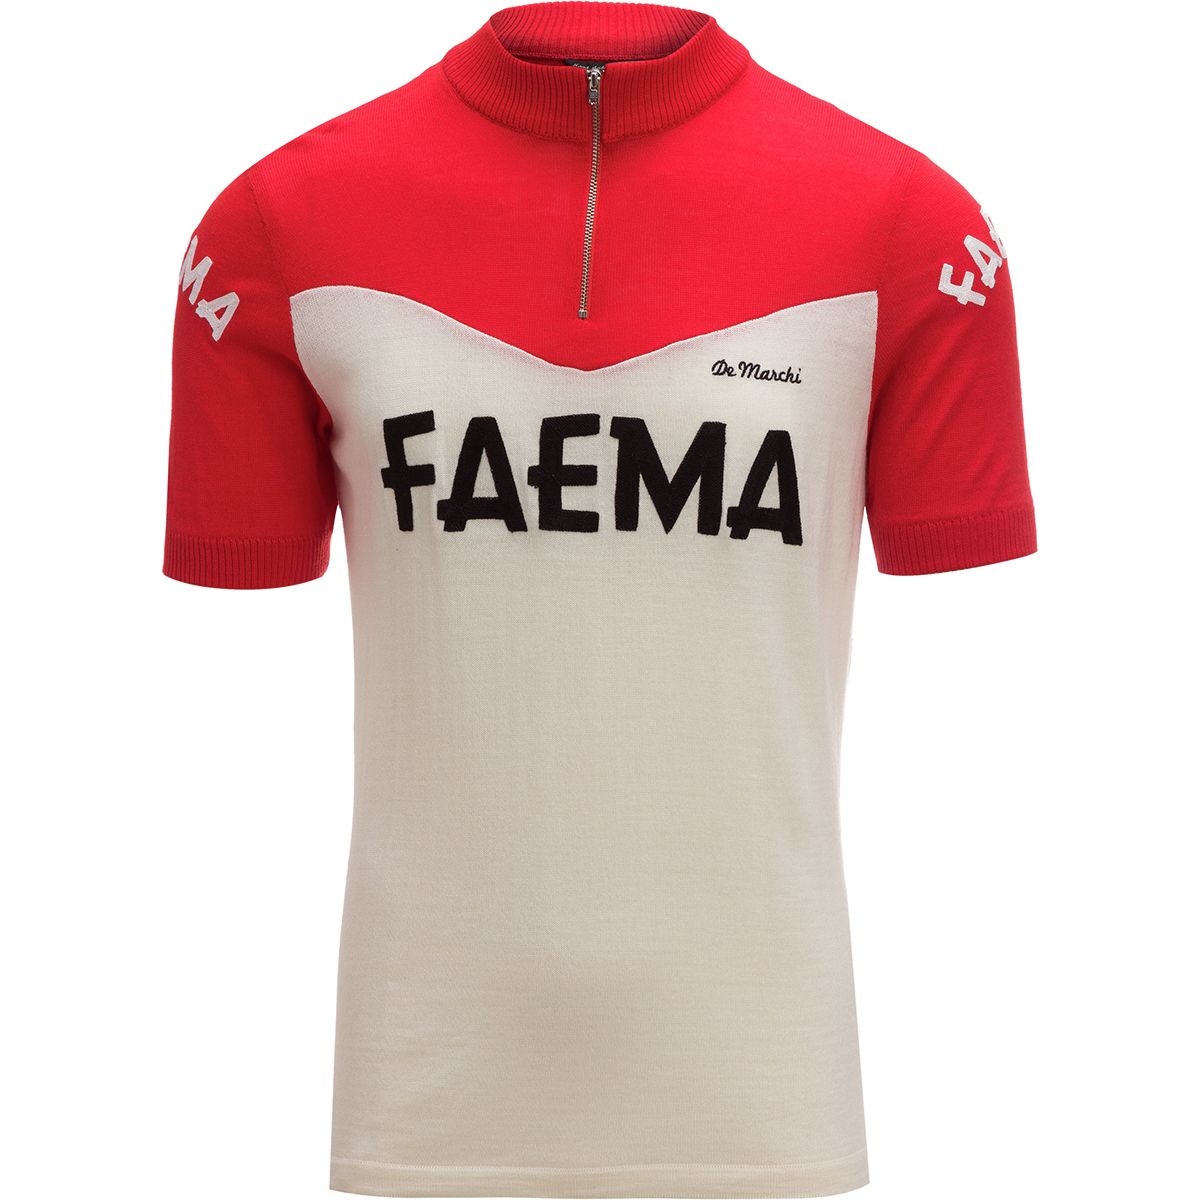 De Marchi Faema 1970 Merino Short-Sleeve Jersey - Men's